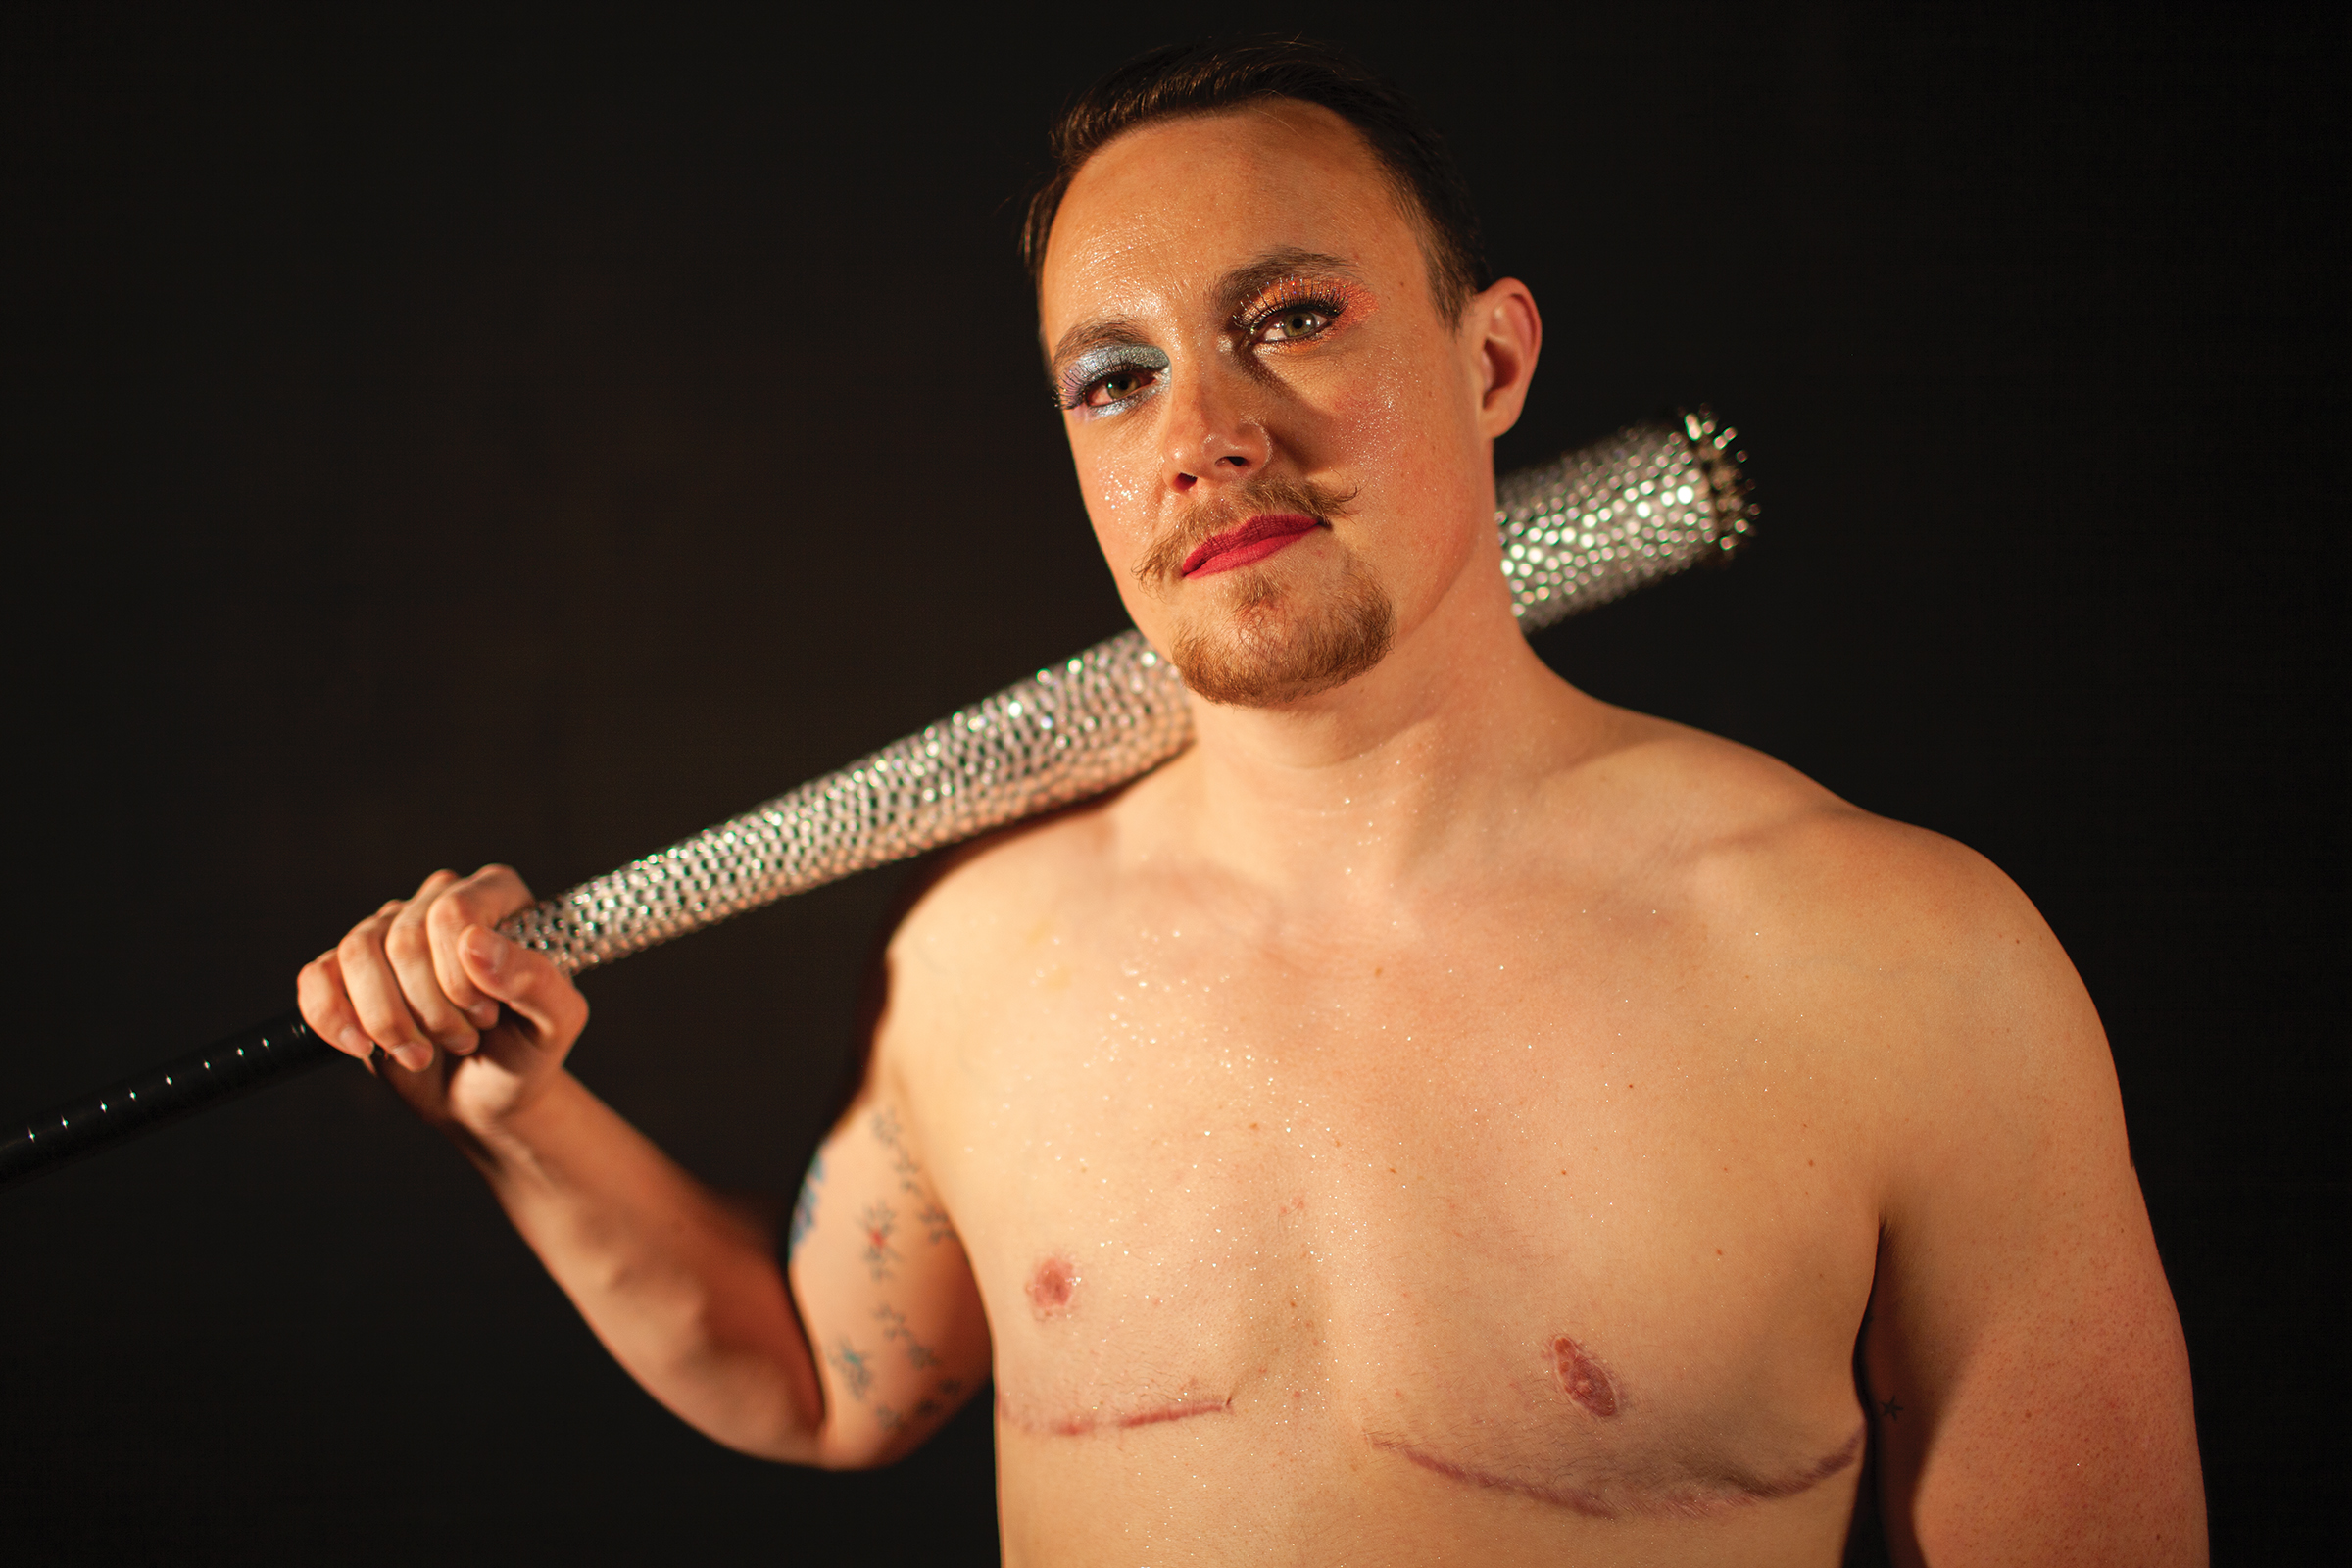 A trans man holding a sparkly bat.